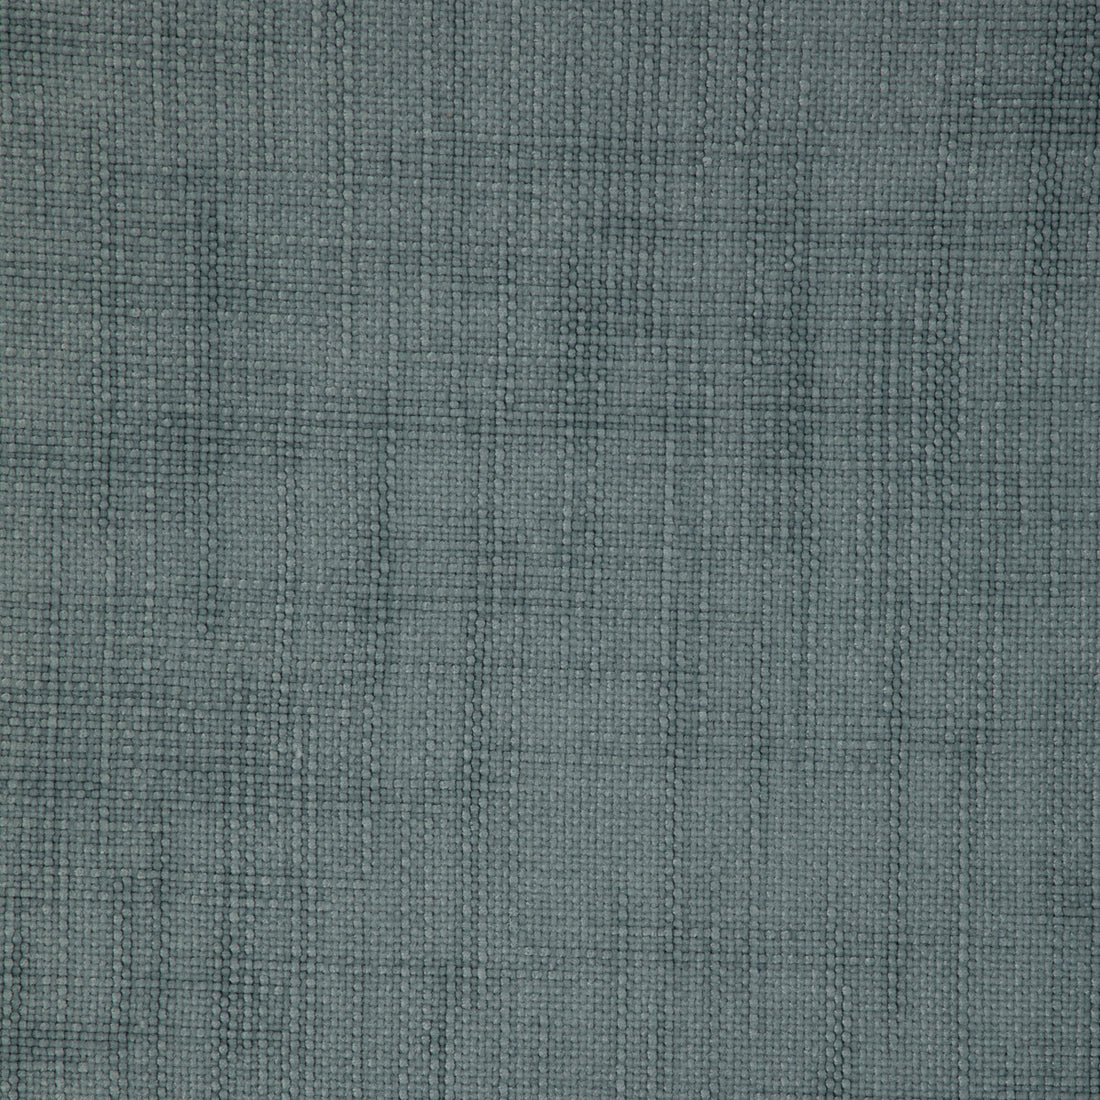 Kravet Smart fabric in 36991-505 color - pattern 36991.505.0 - by Kravet Smart in the Performance Kravetarmor collection